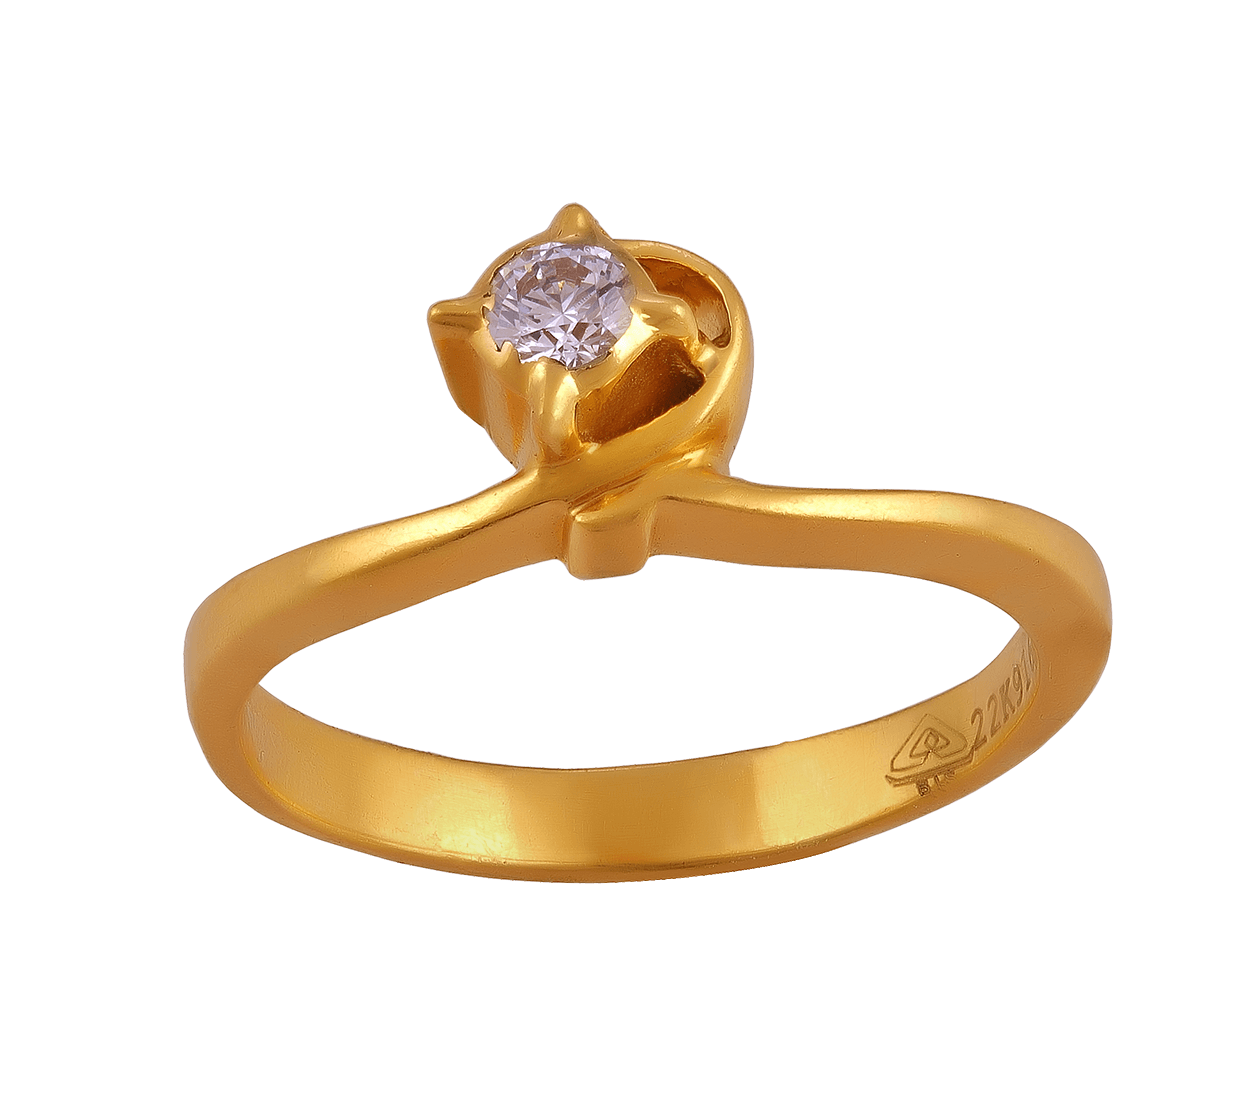 SZUL 1/4 Carat Round Diamond Solitaire Ring in 14K Yellow Gold | Amazon.com